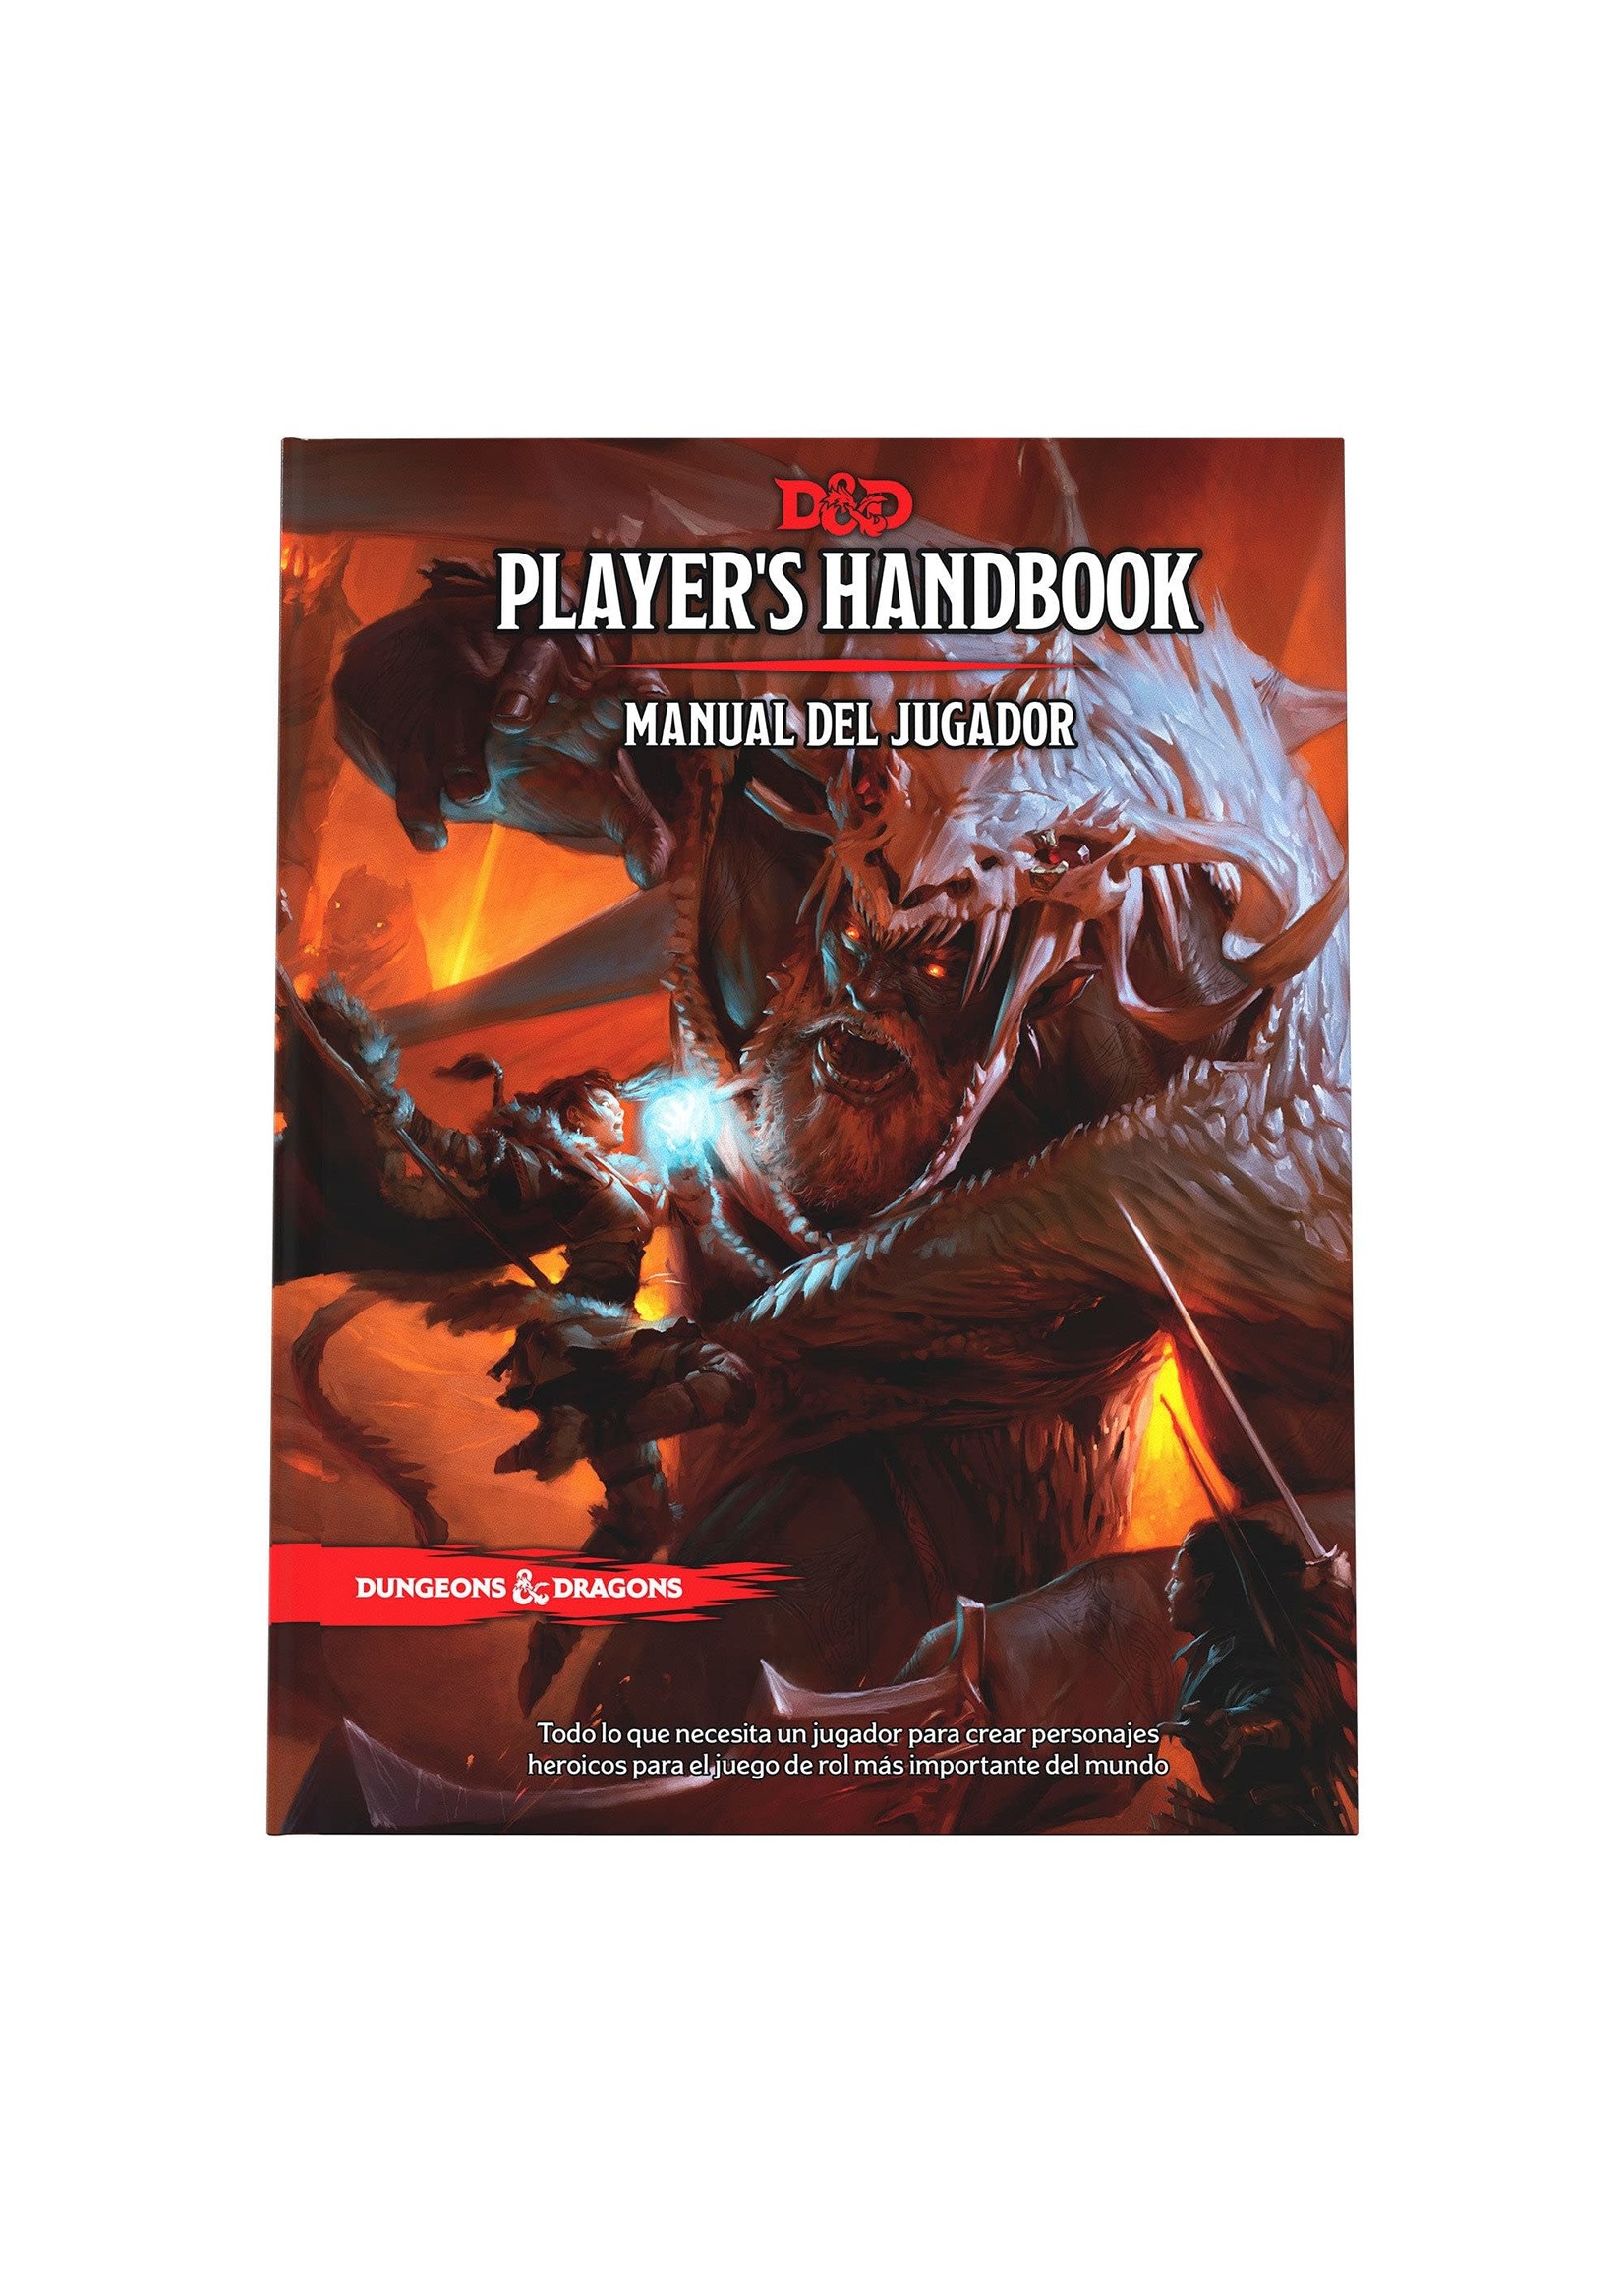 Dungeons & Dragons D&D, 5e: Player's Handbook, Spanish Edition (Manual del Jugador)